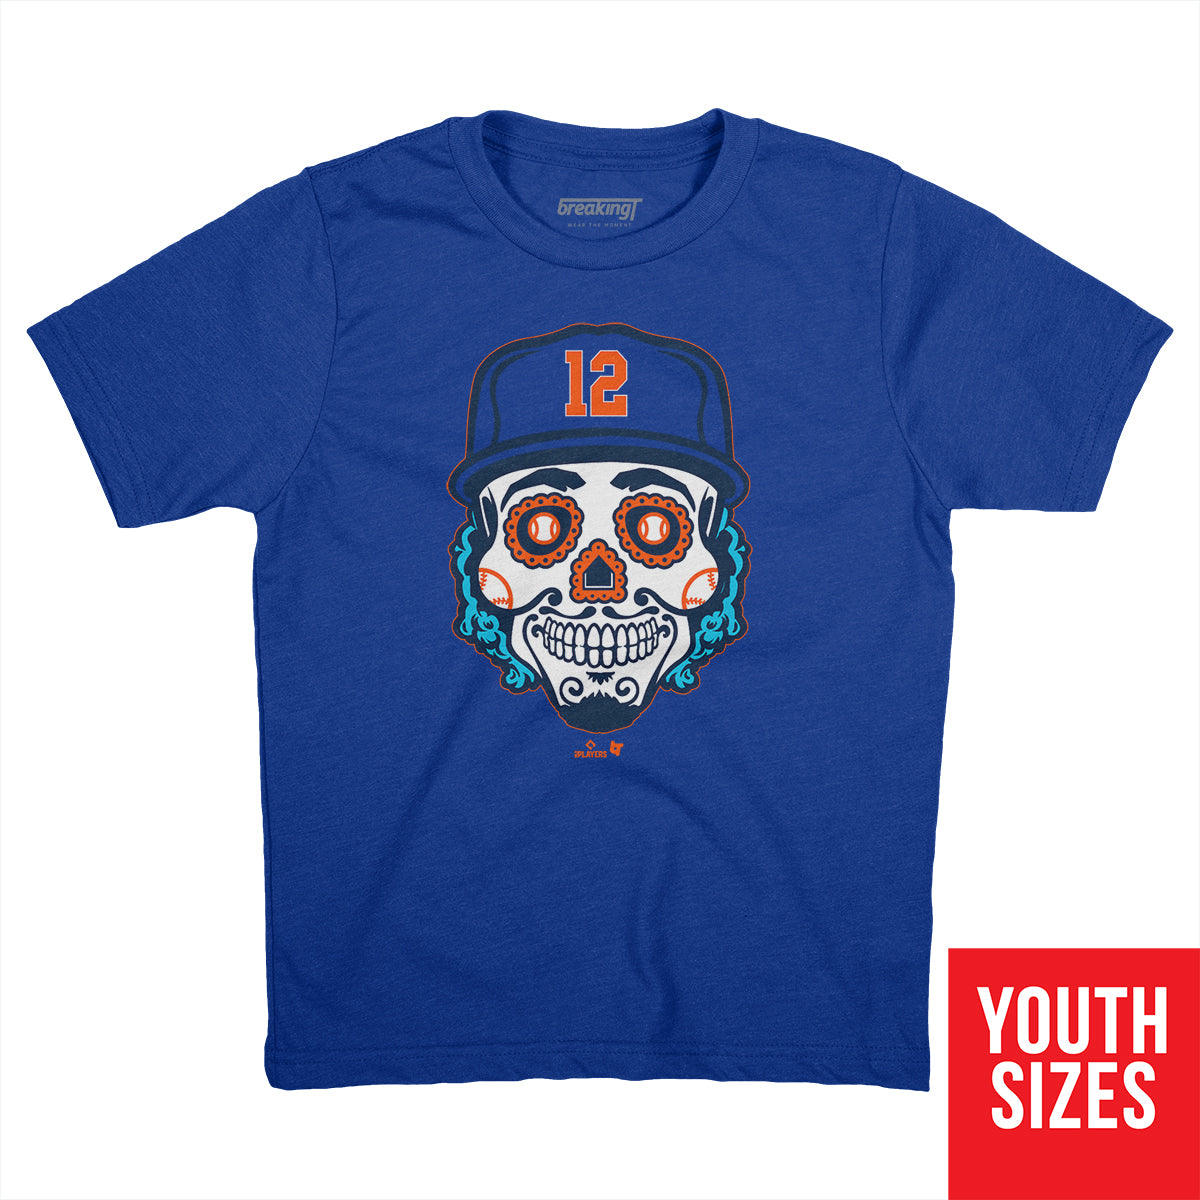 Sugar Skull Houston Astros Shirt - High-Quality Printed Brand